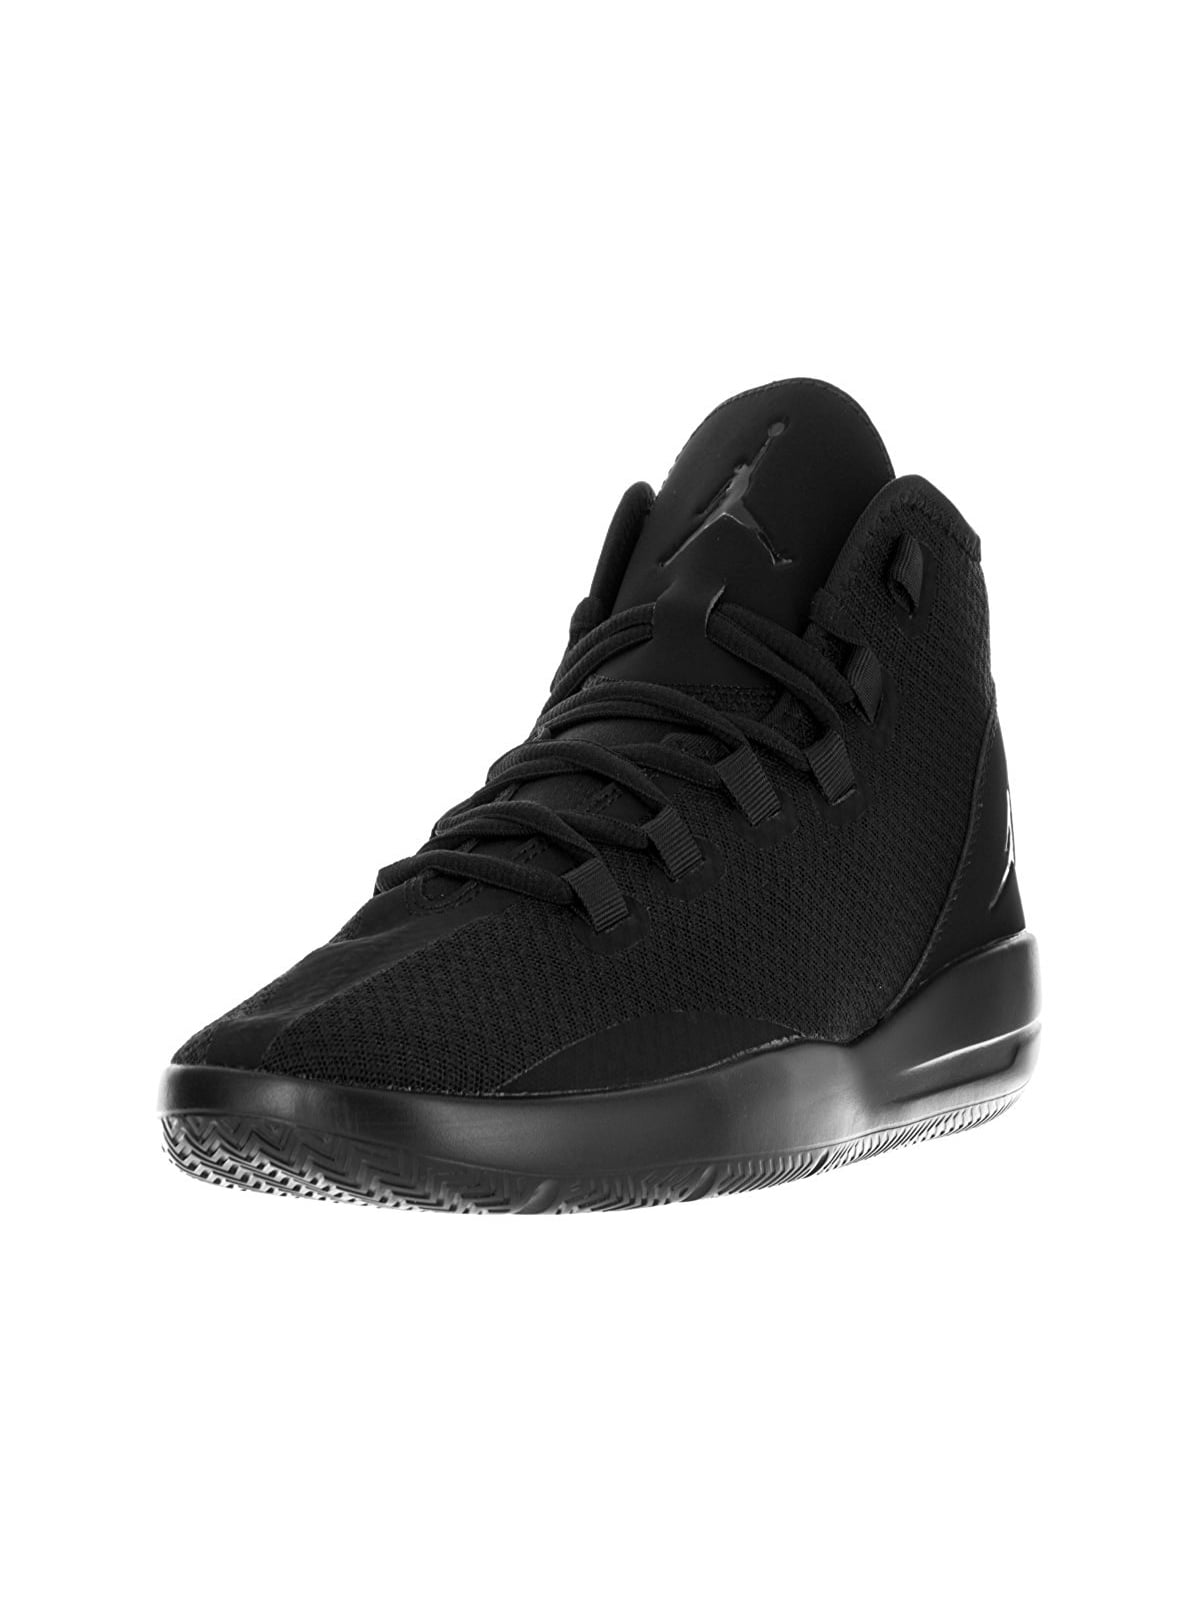 Basketball Shoes 834064-020 